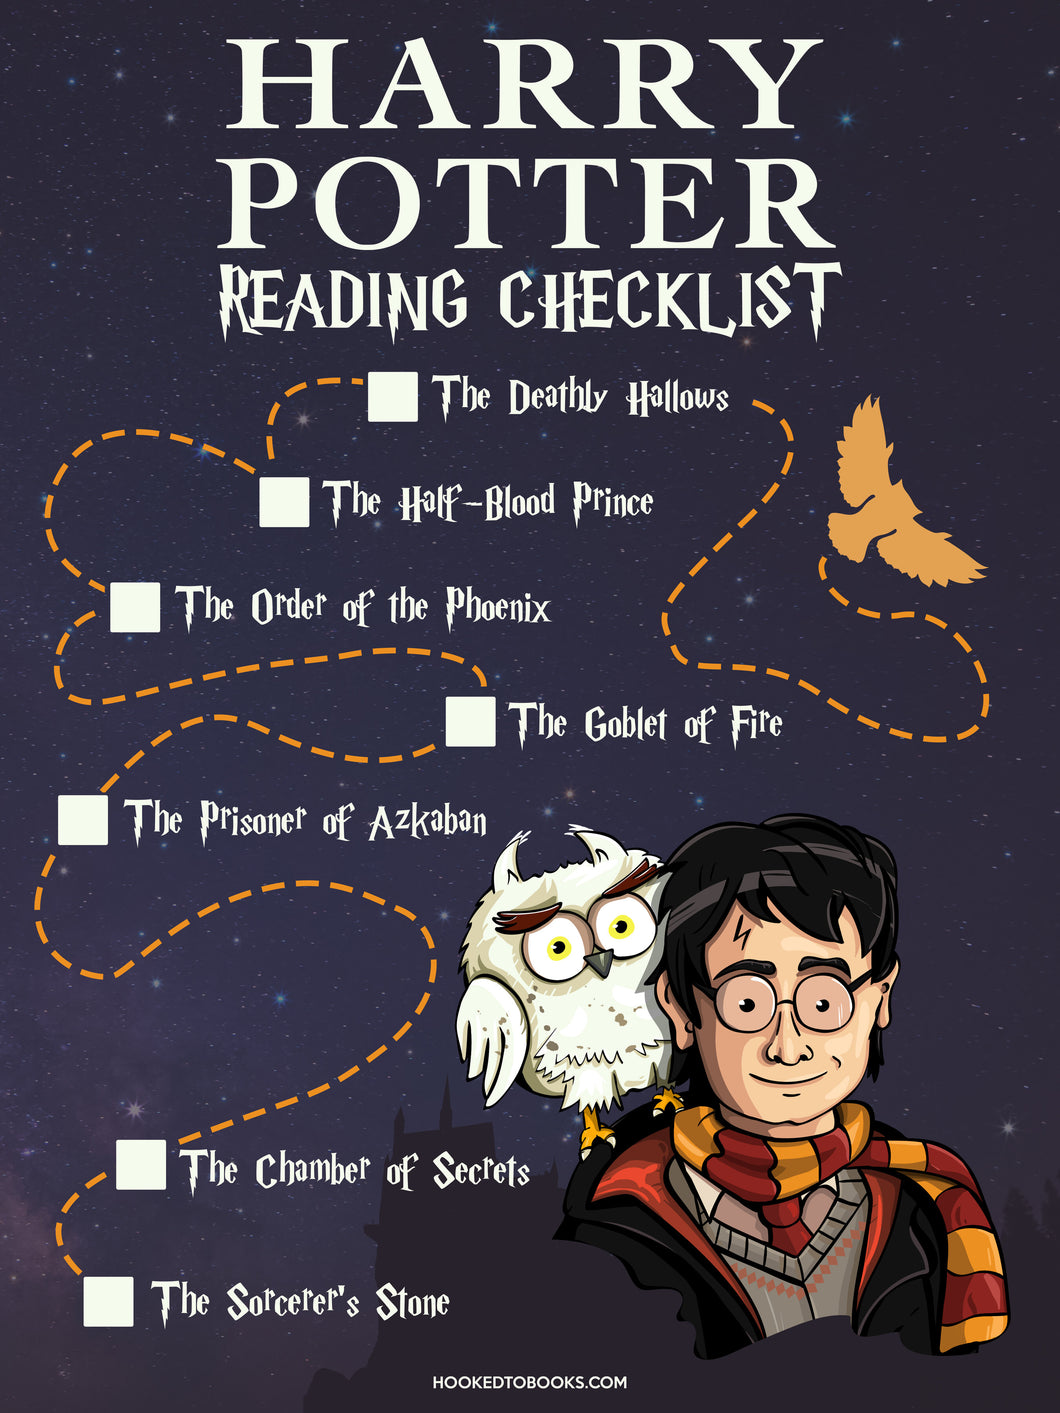 Harry Potter Reading Checklist